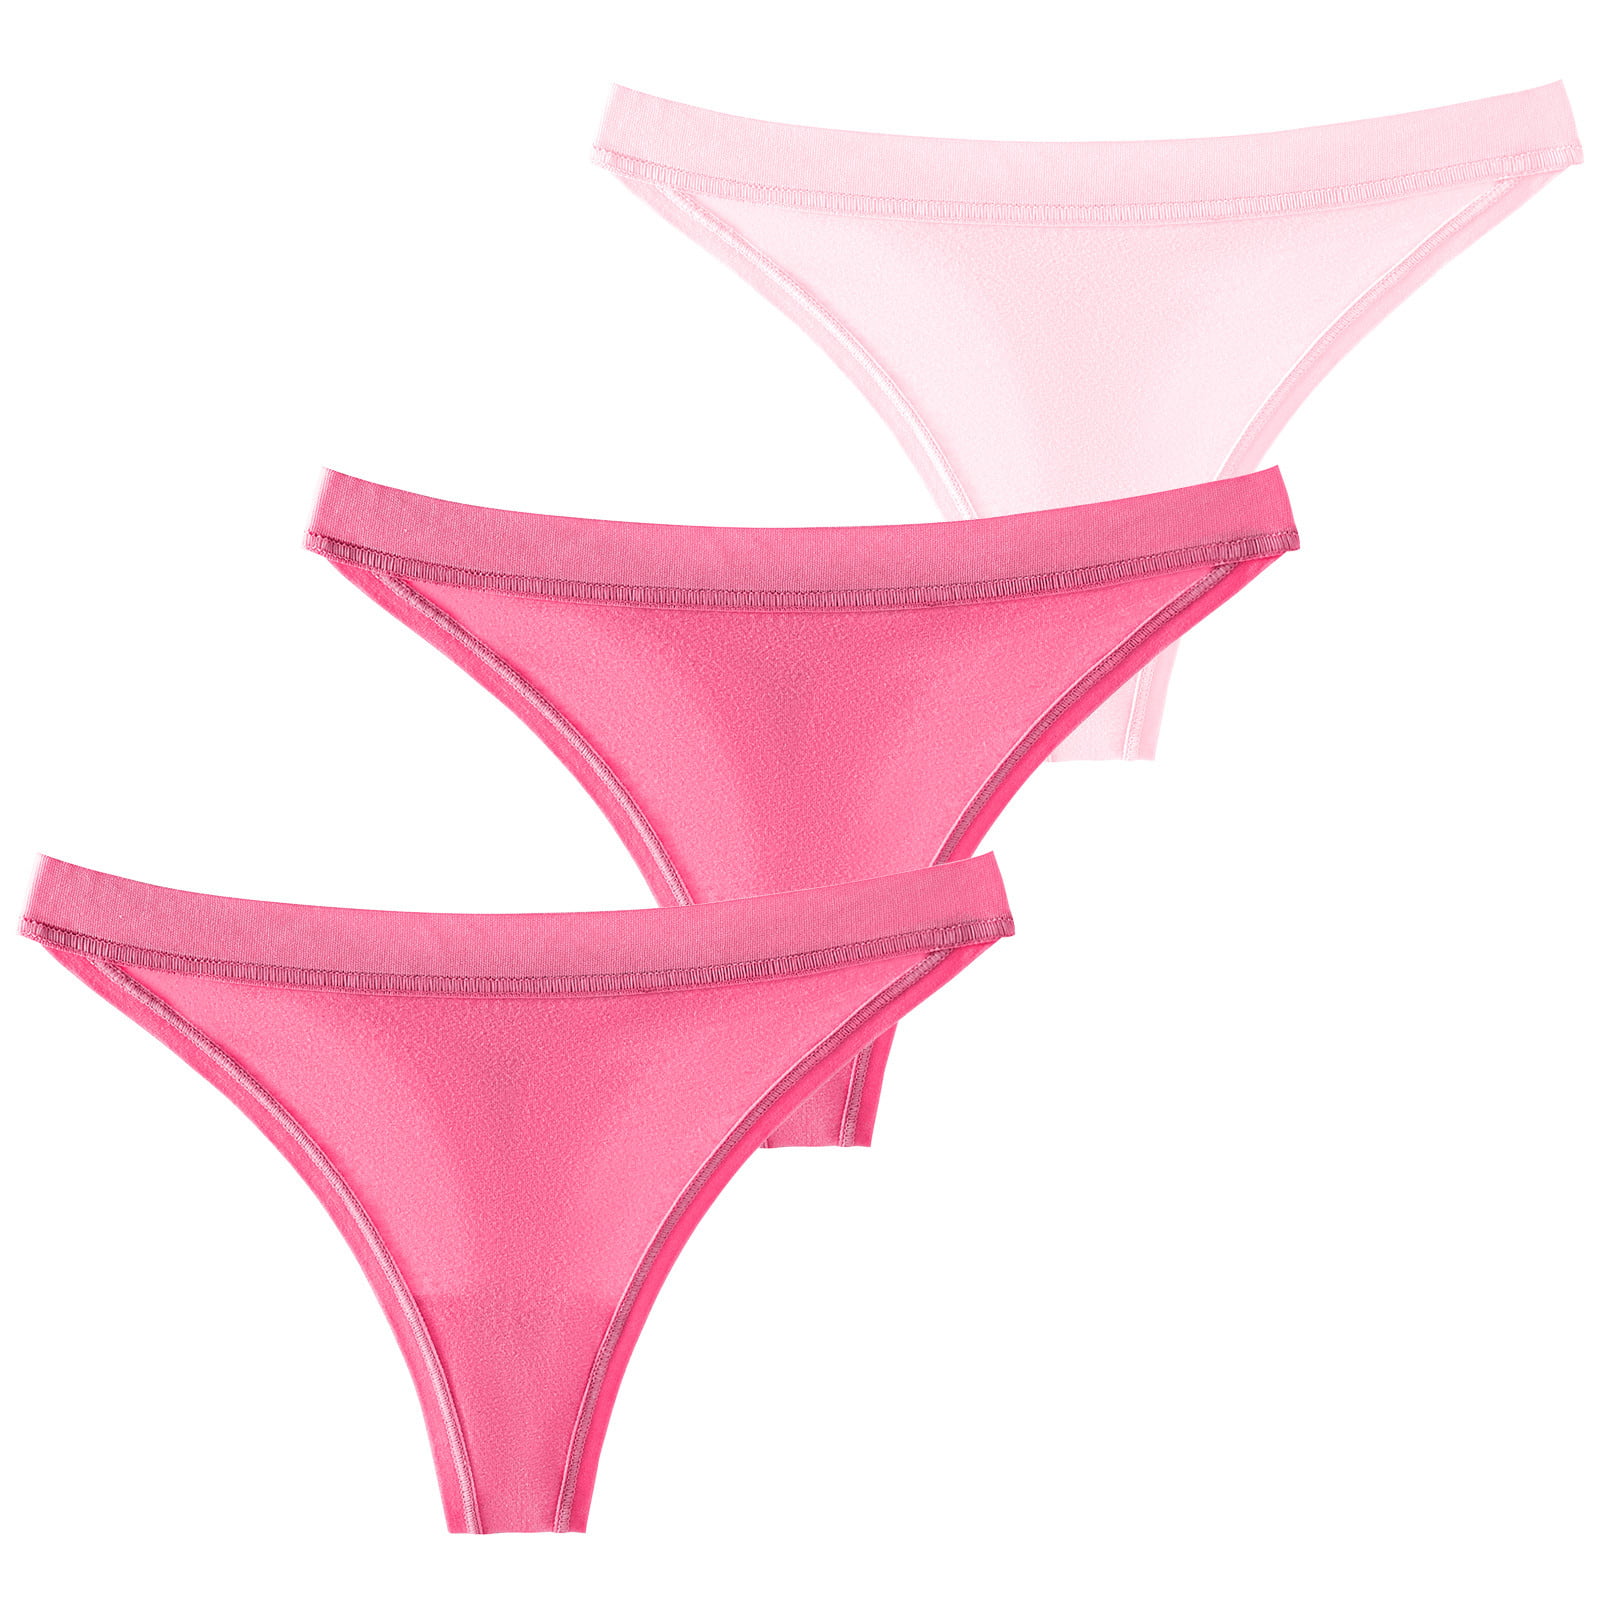 Underwear Women Under Patchwork Color Panties Bikini Solid Briefs Knickers  Valentines Gift 3 Pieces 